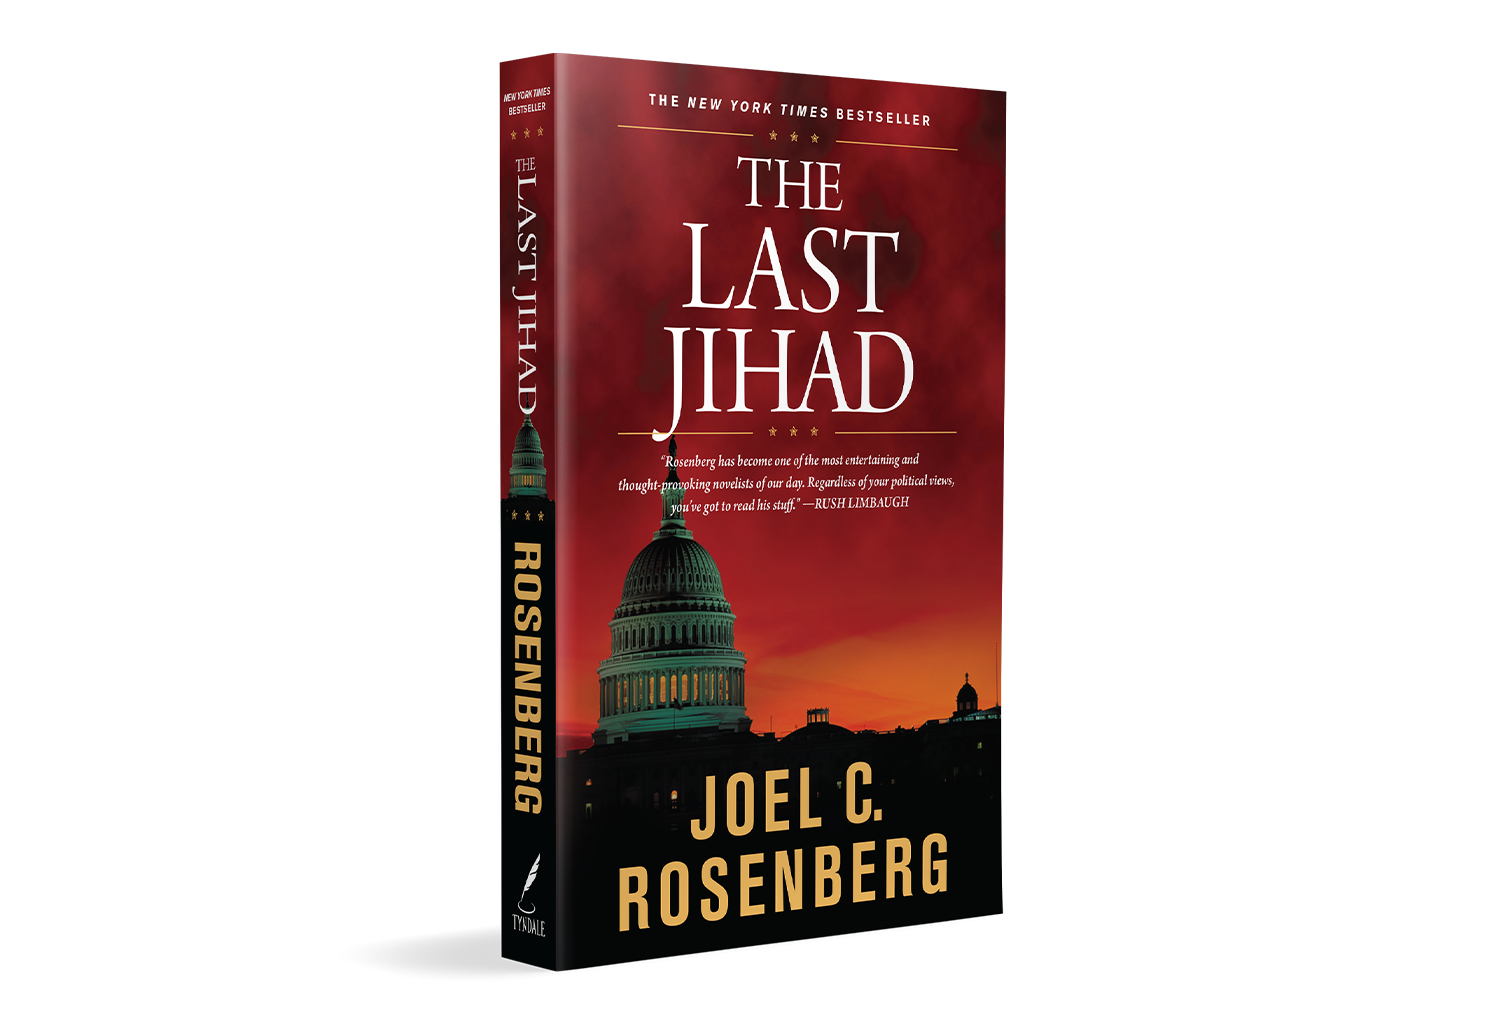 The Last Jihad by Joel C. Rosenberg on TBN